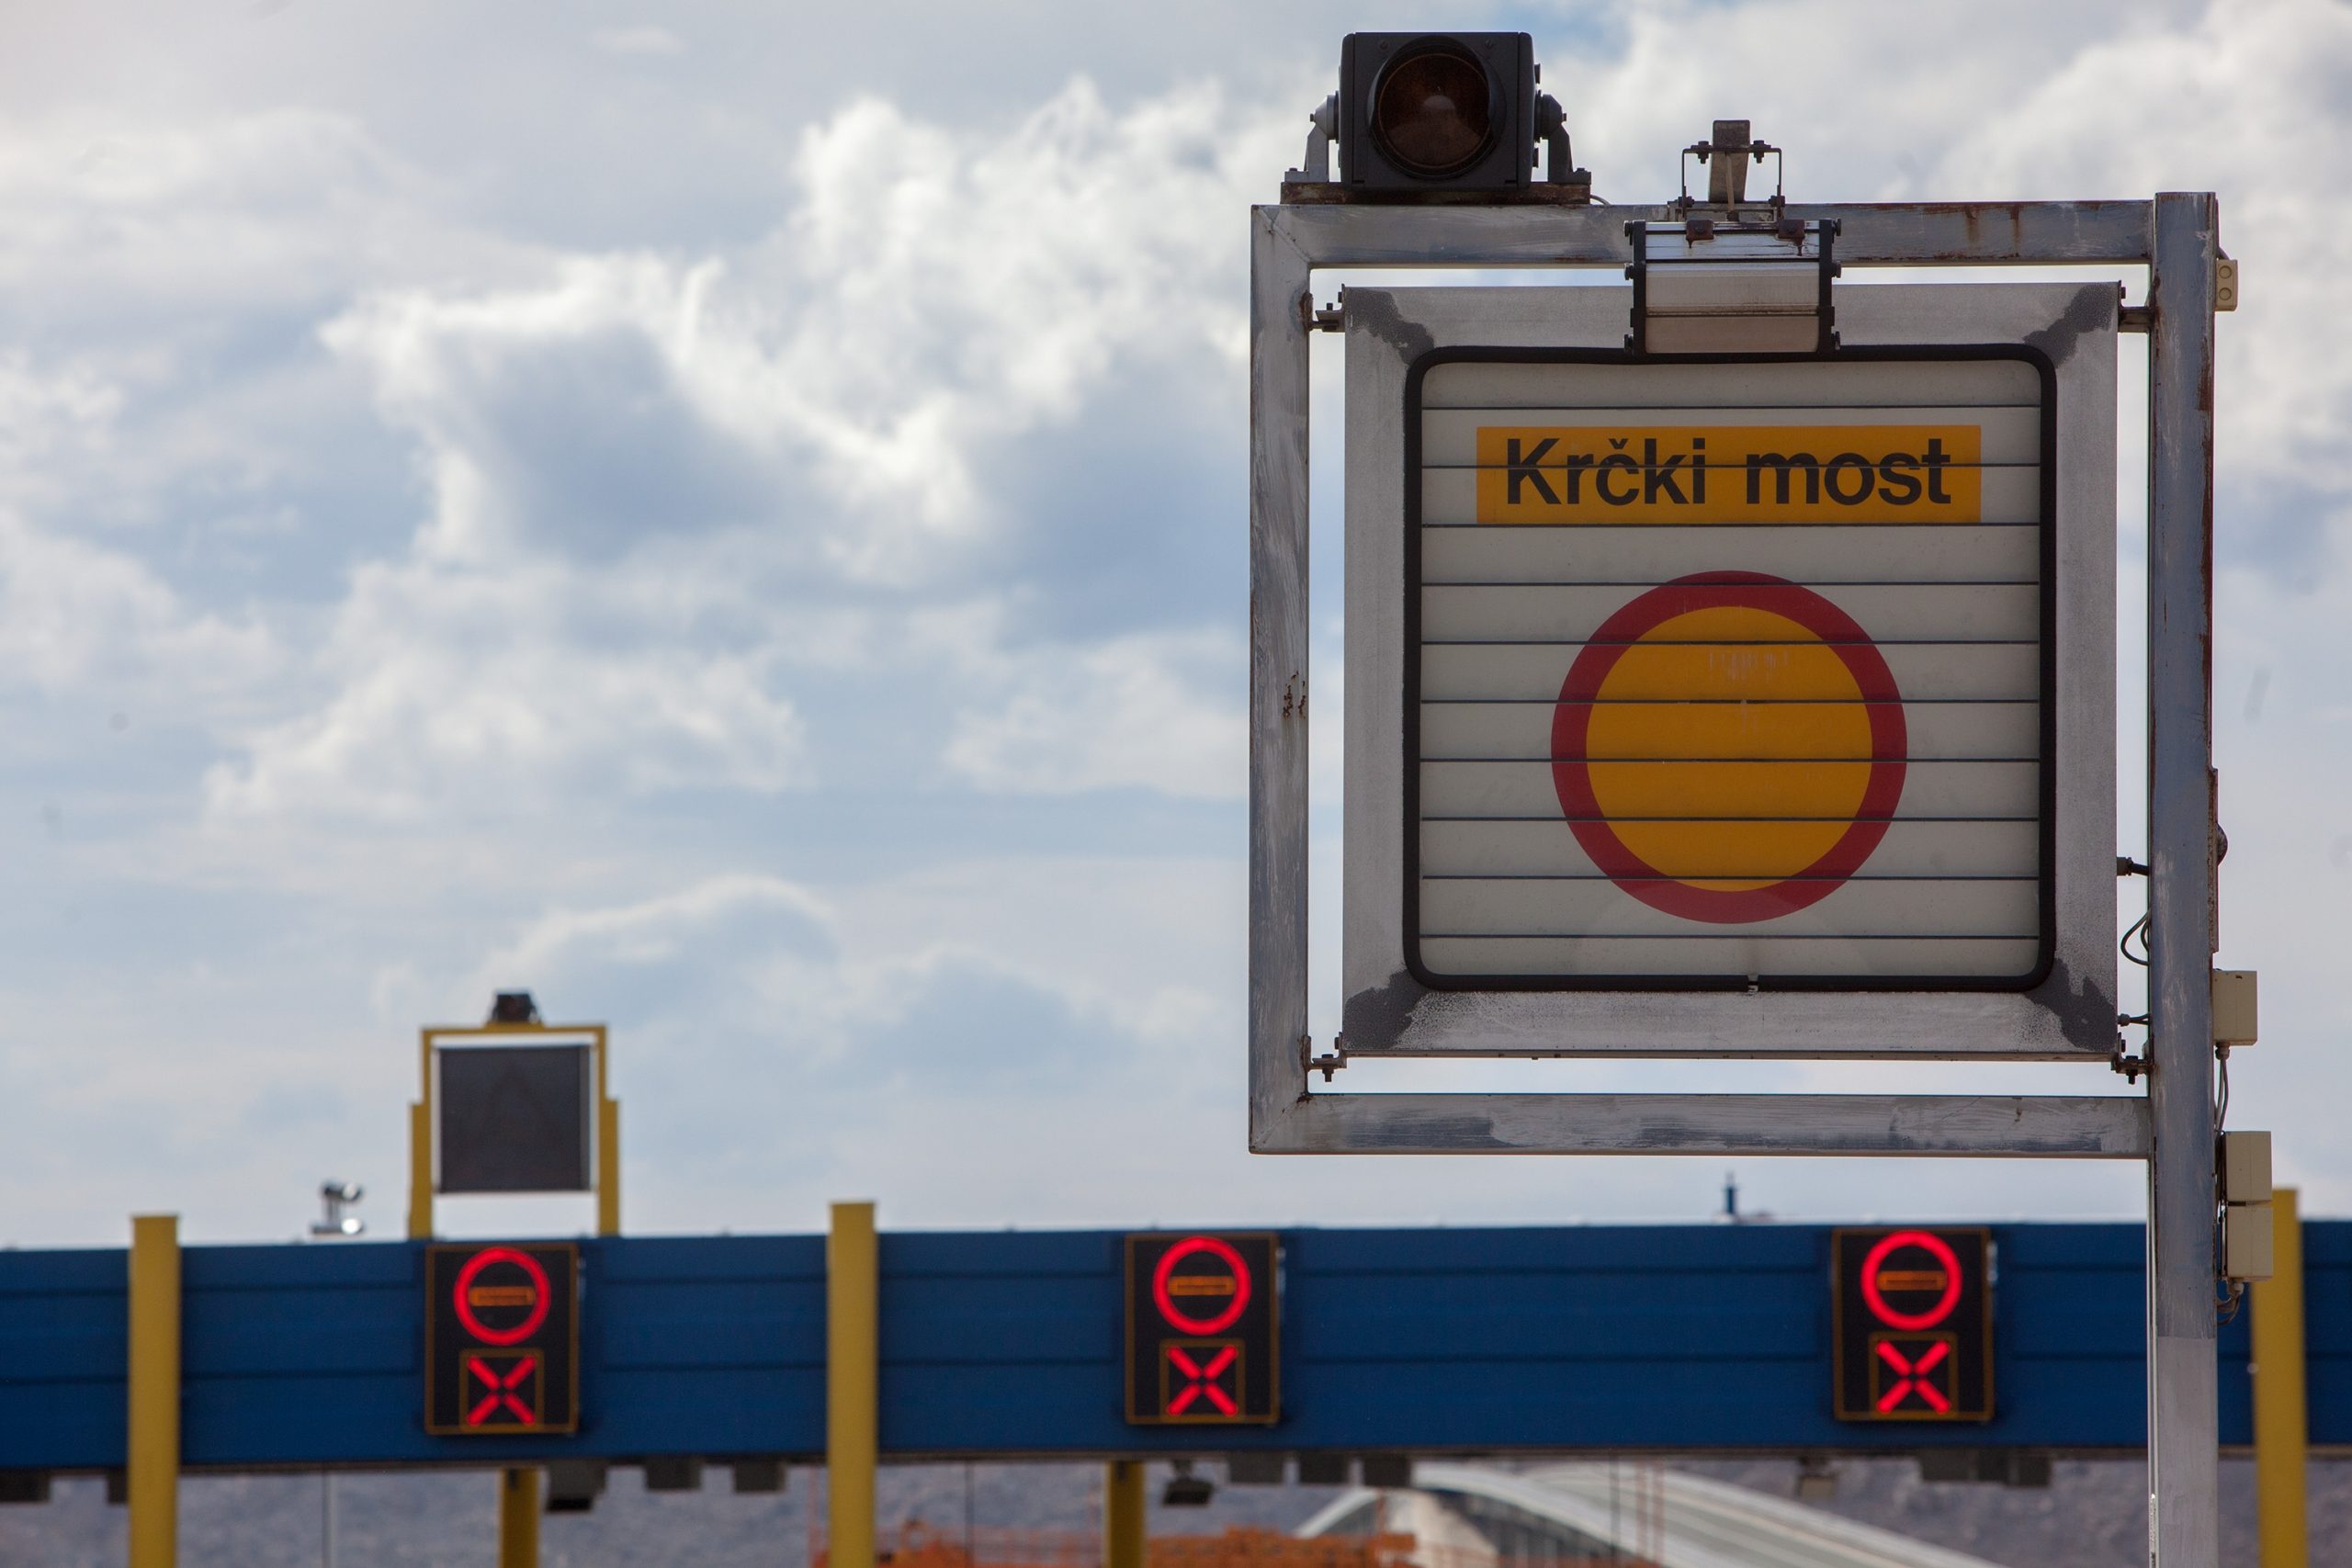 05.03.2015., Krcki most - Zbog orkanske bure koja na mahove puse i do 200km/h Krcki most zatvoren je za sve skupine vozila.
Photo: Nel Pavletic/PIXSELL